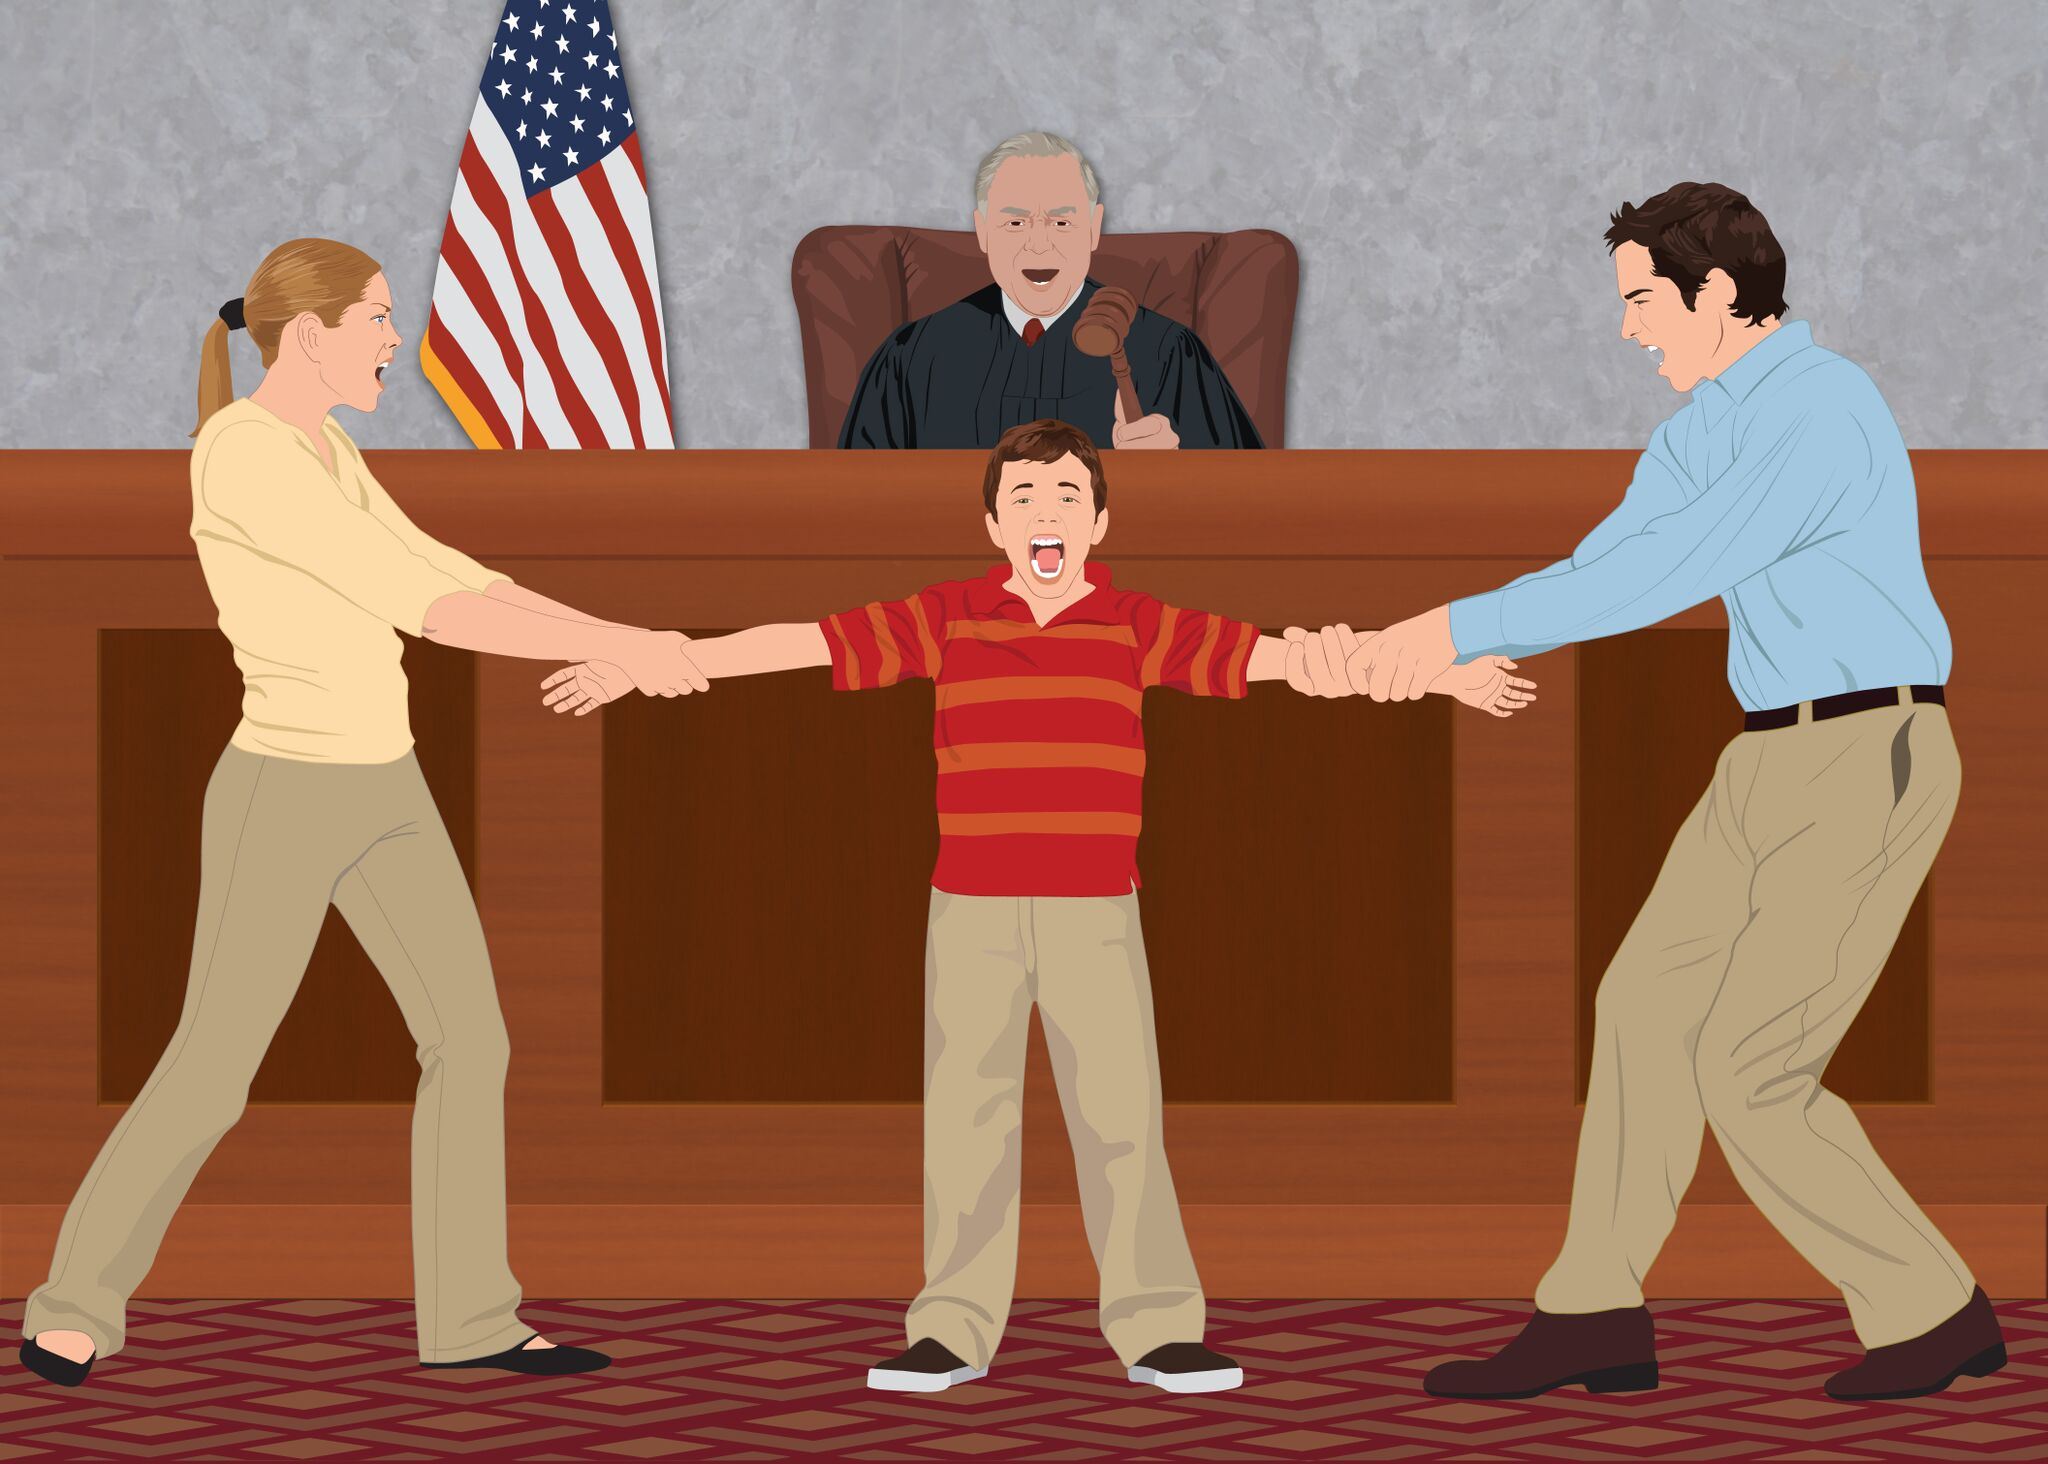 family law child custody